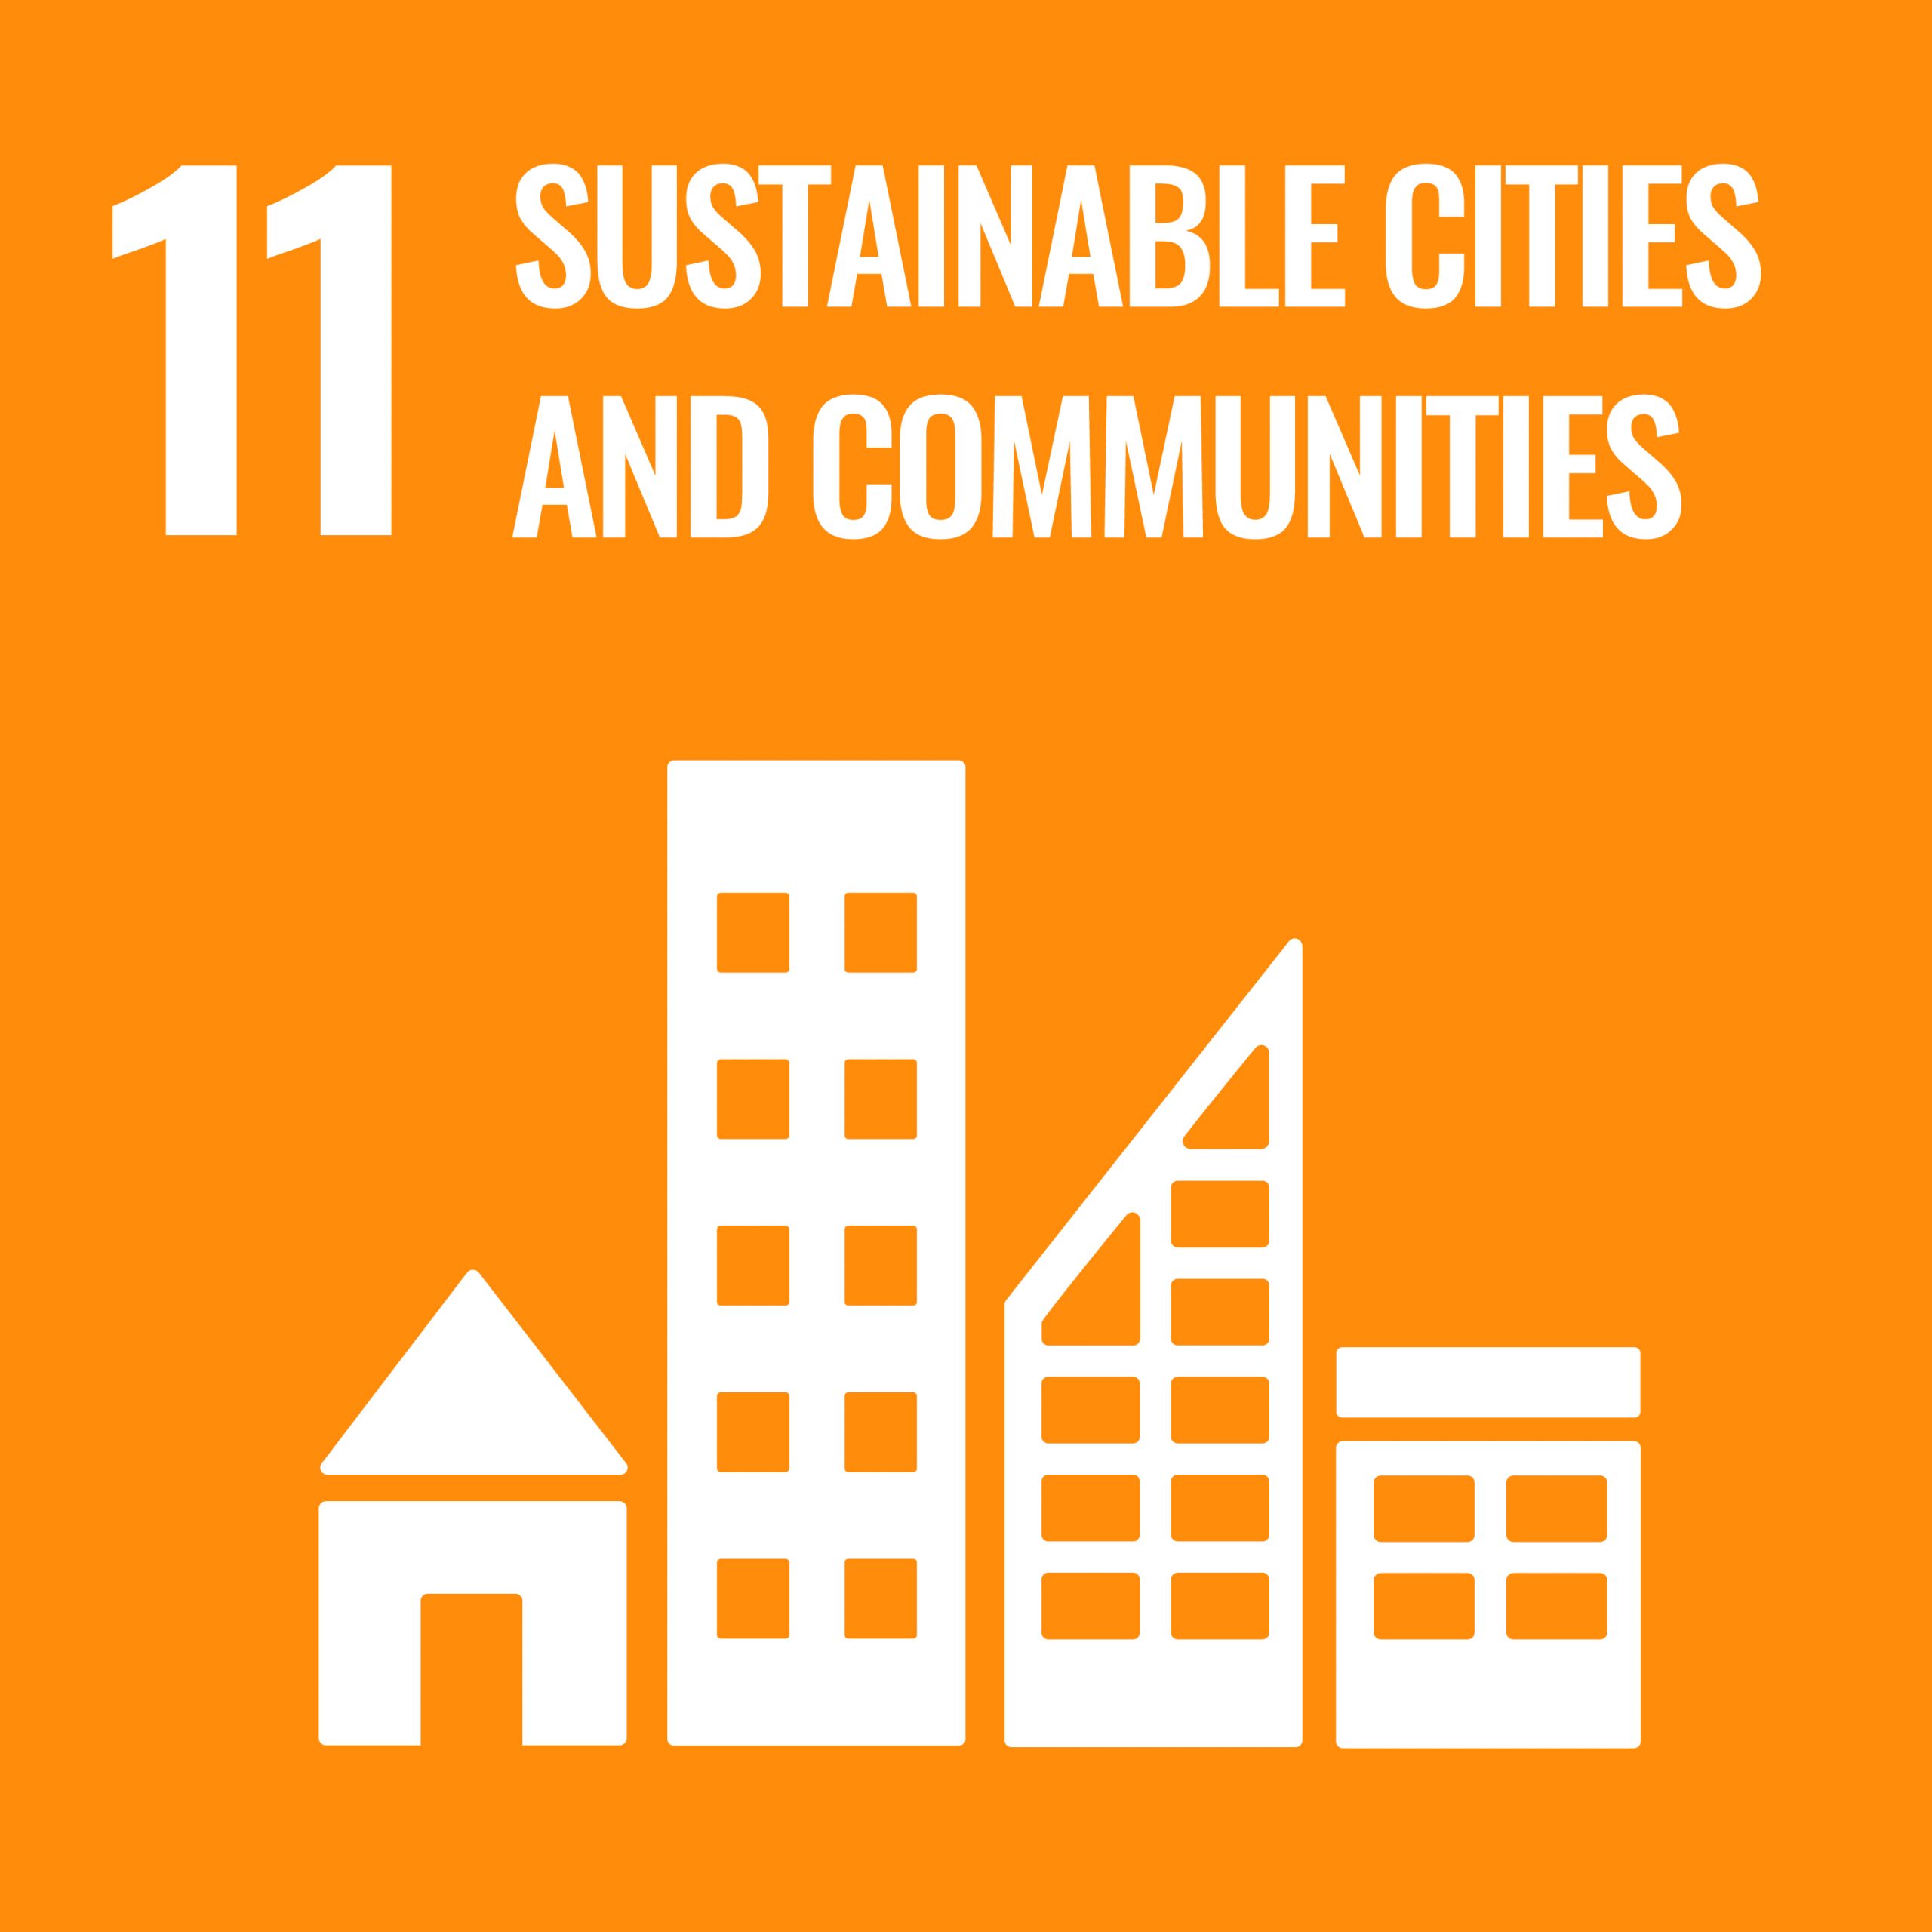 Sustainabile cities and communities - SDG 11